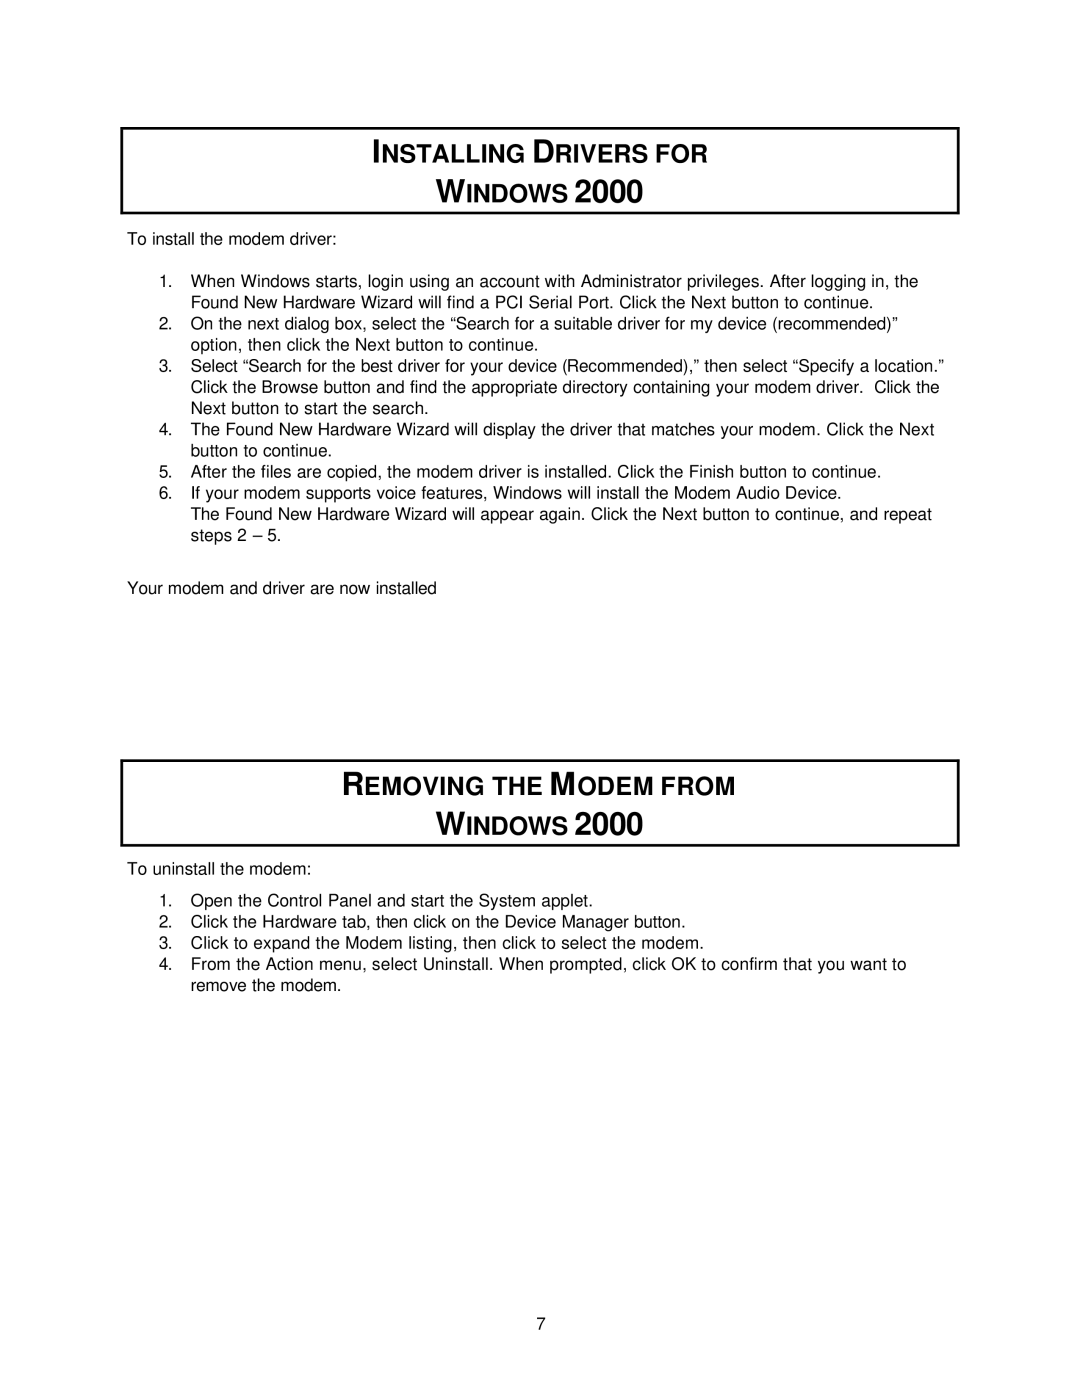 USRobotics 3Com manual Installing Drivers for Windows, Removing the Modem from Windows 